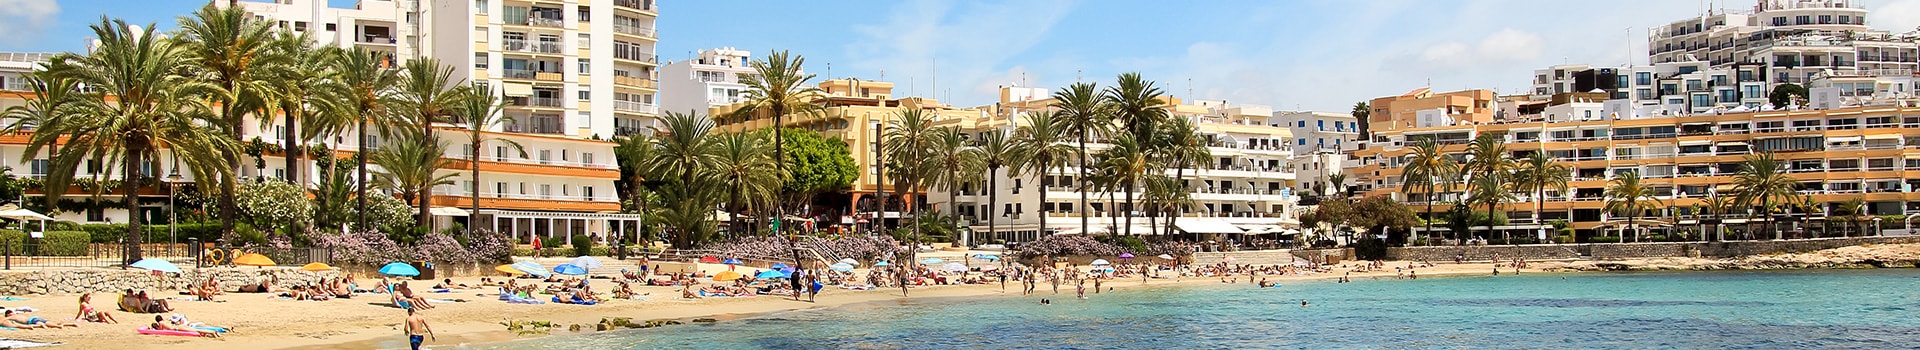 Billetes de Barco de Palma de Mallorca a Ibiza (ciudad)